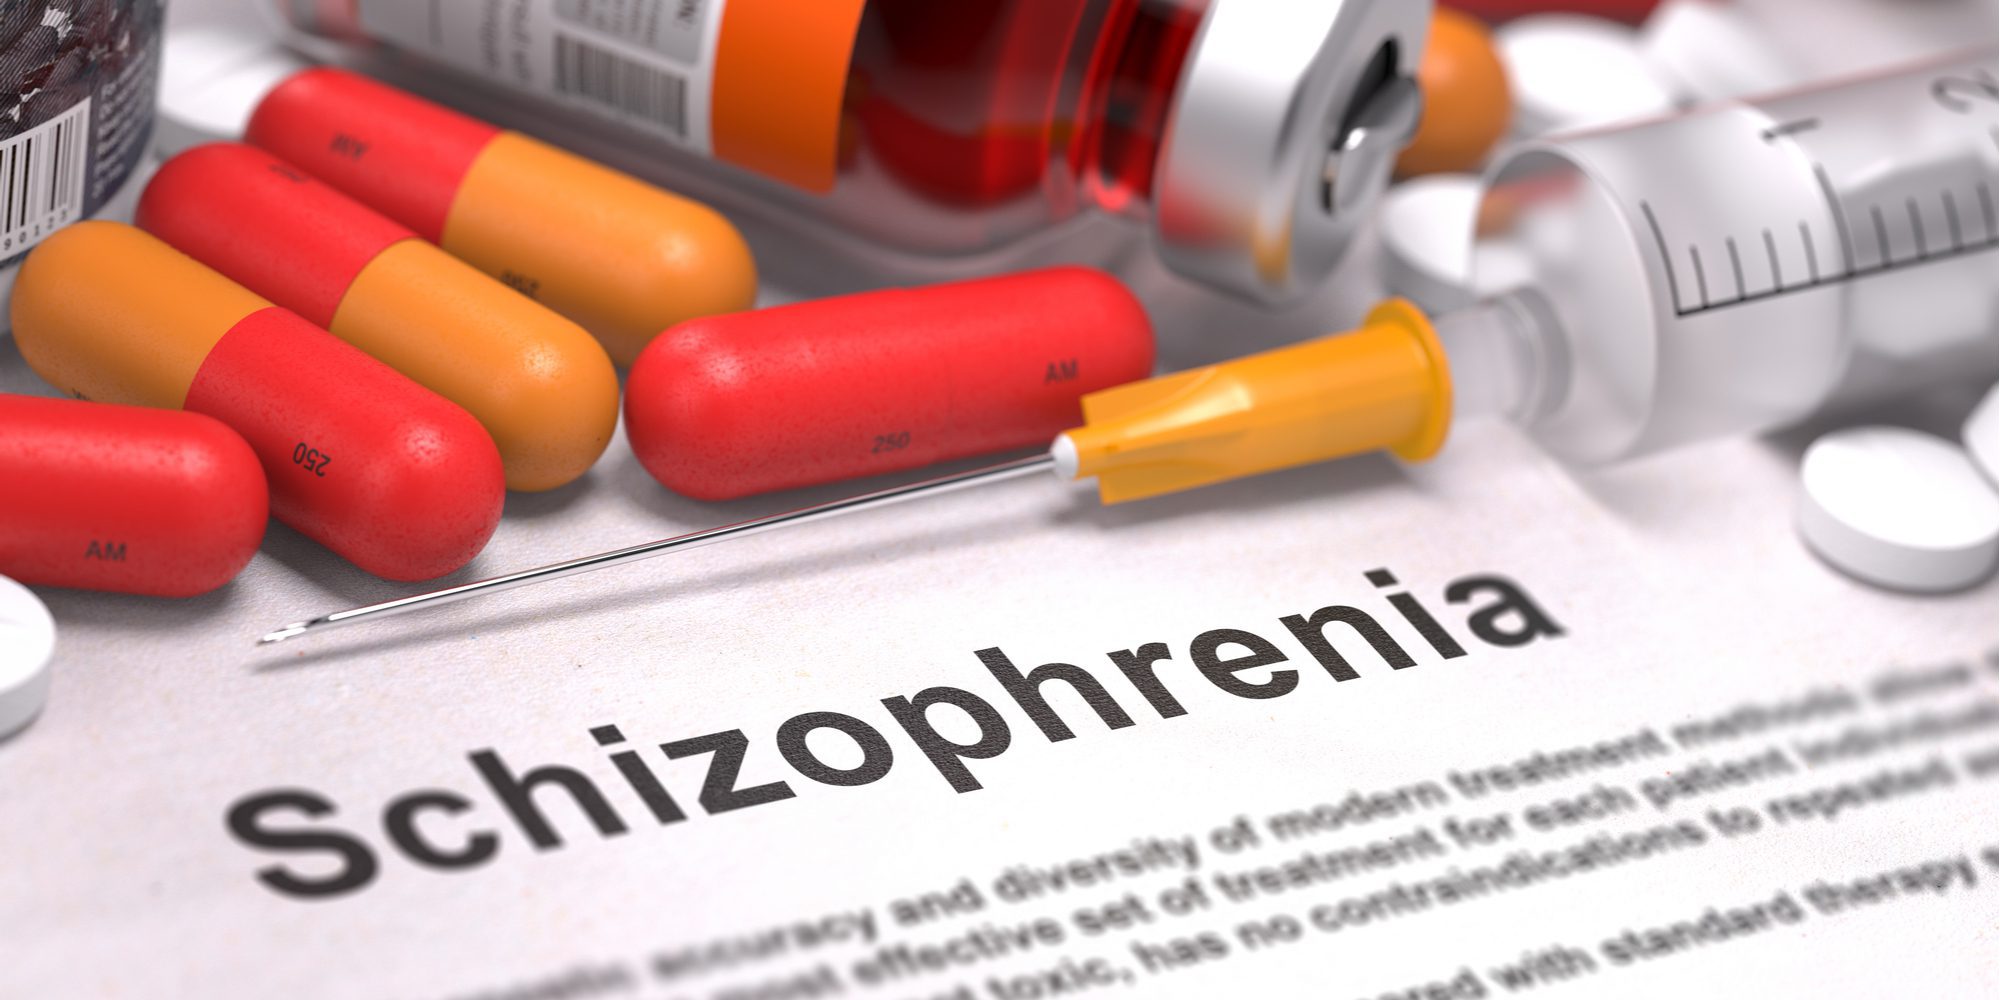 schizophrenia treatment essay